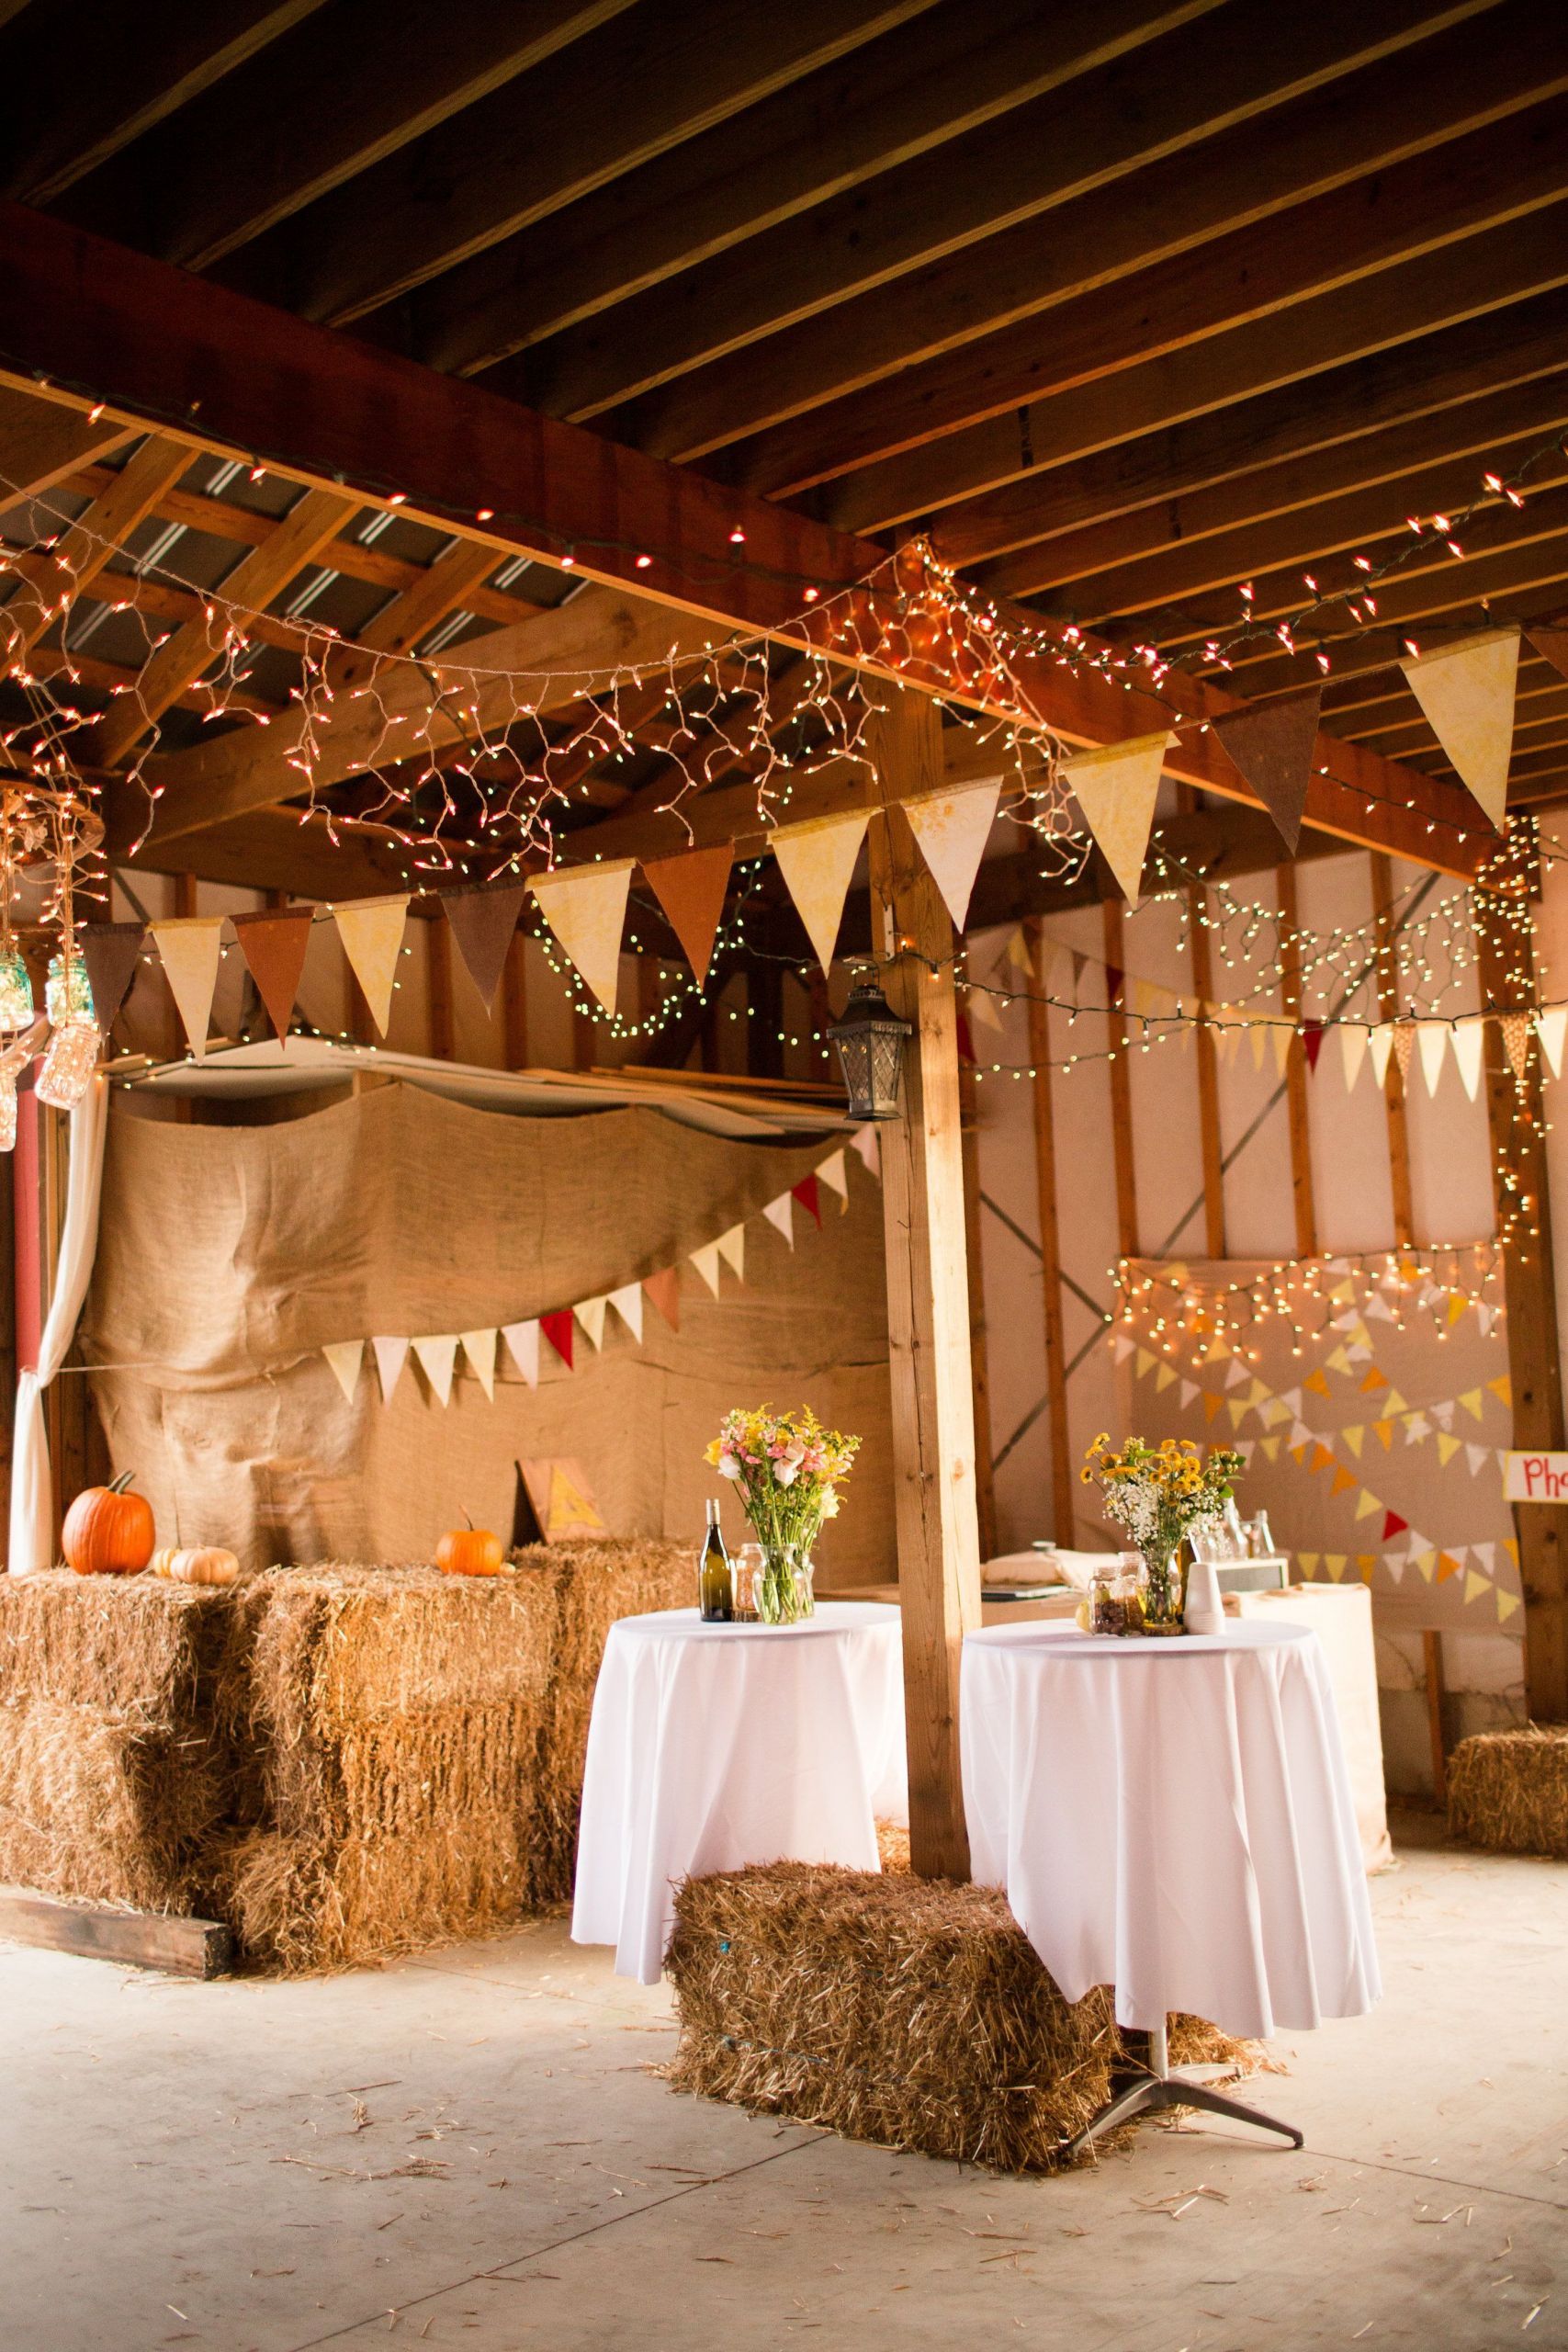 DIY Barn Wedding Decorations
 Fall Decor